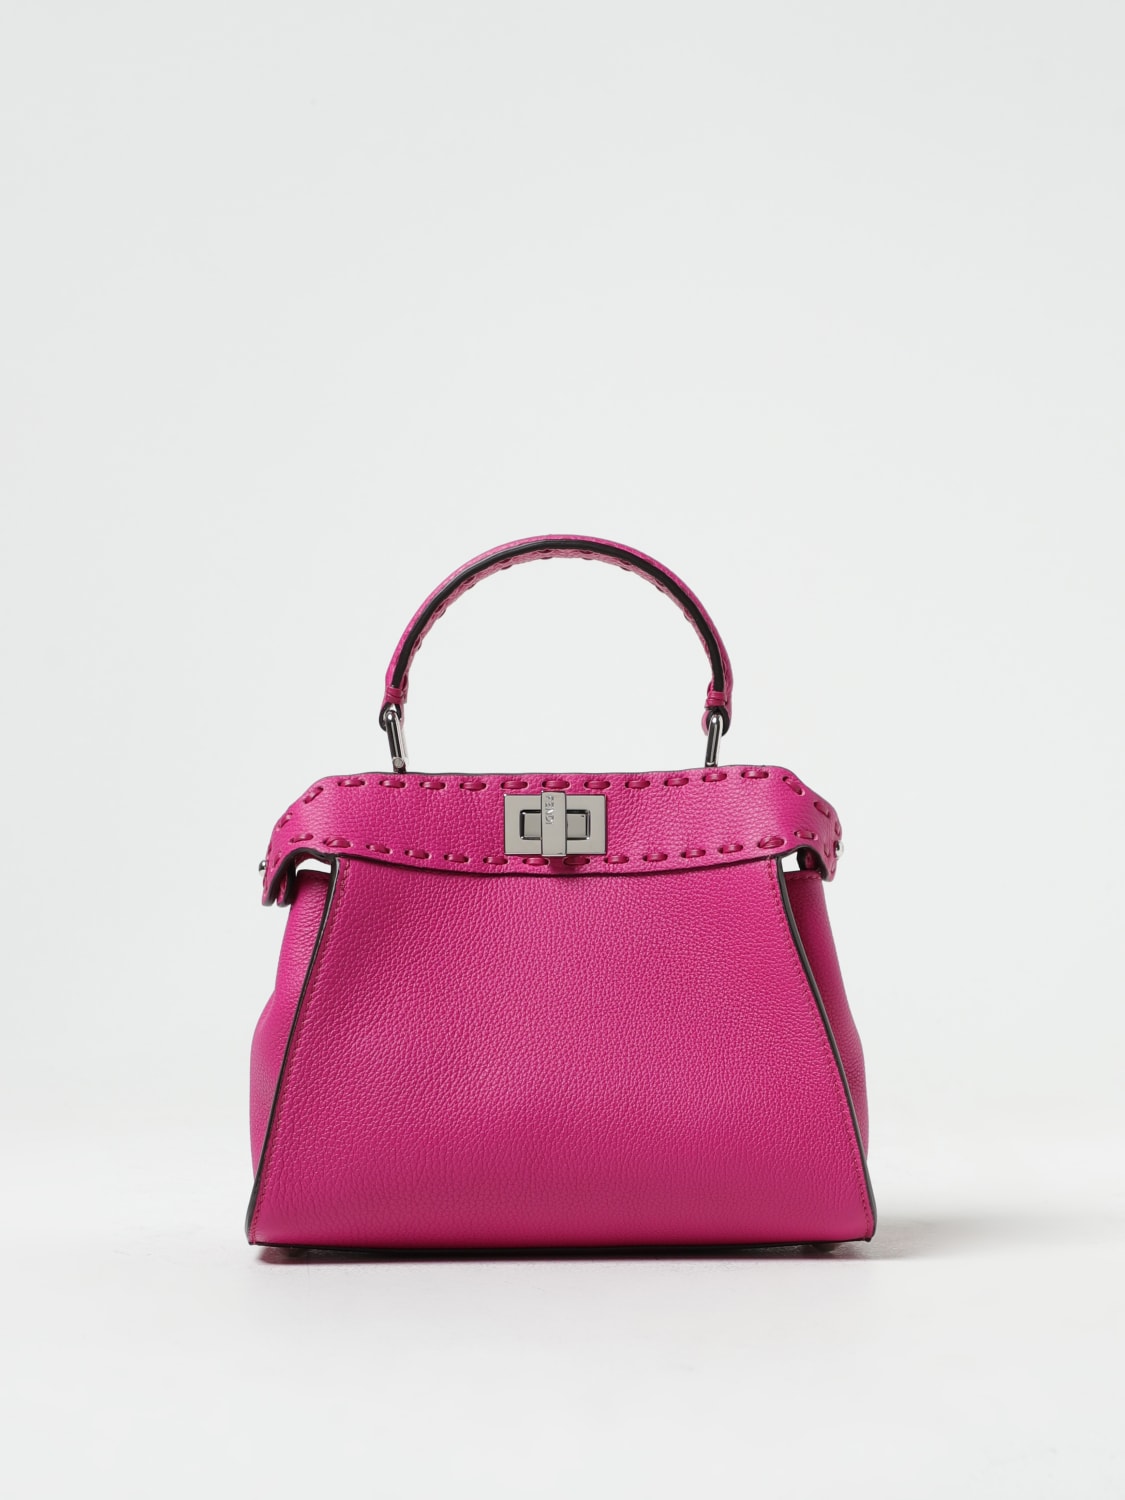 FENDI: Peekaboo Mini bag in grained leather - Fuchsia | Fendi mini